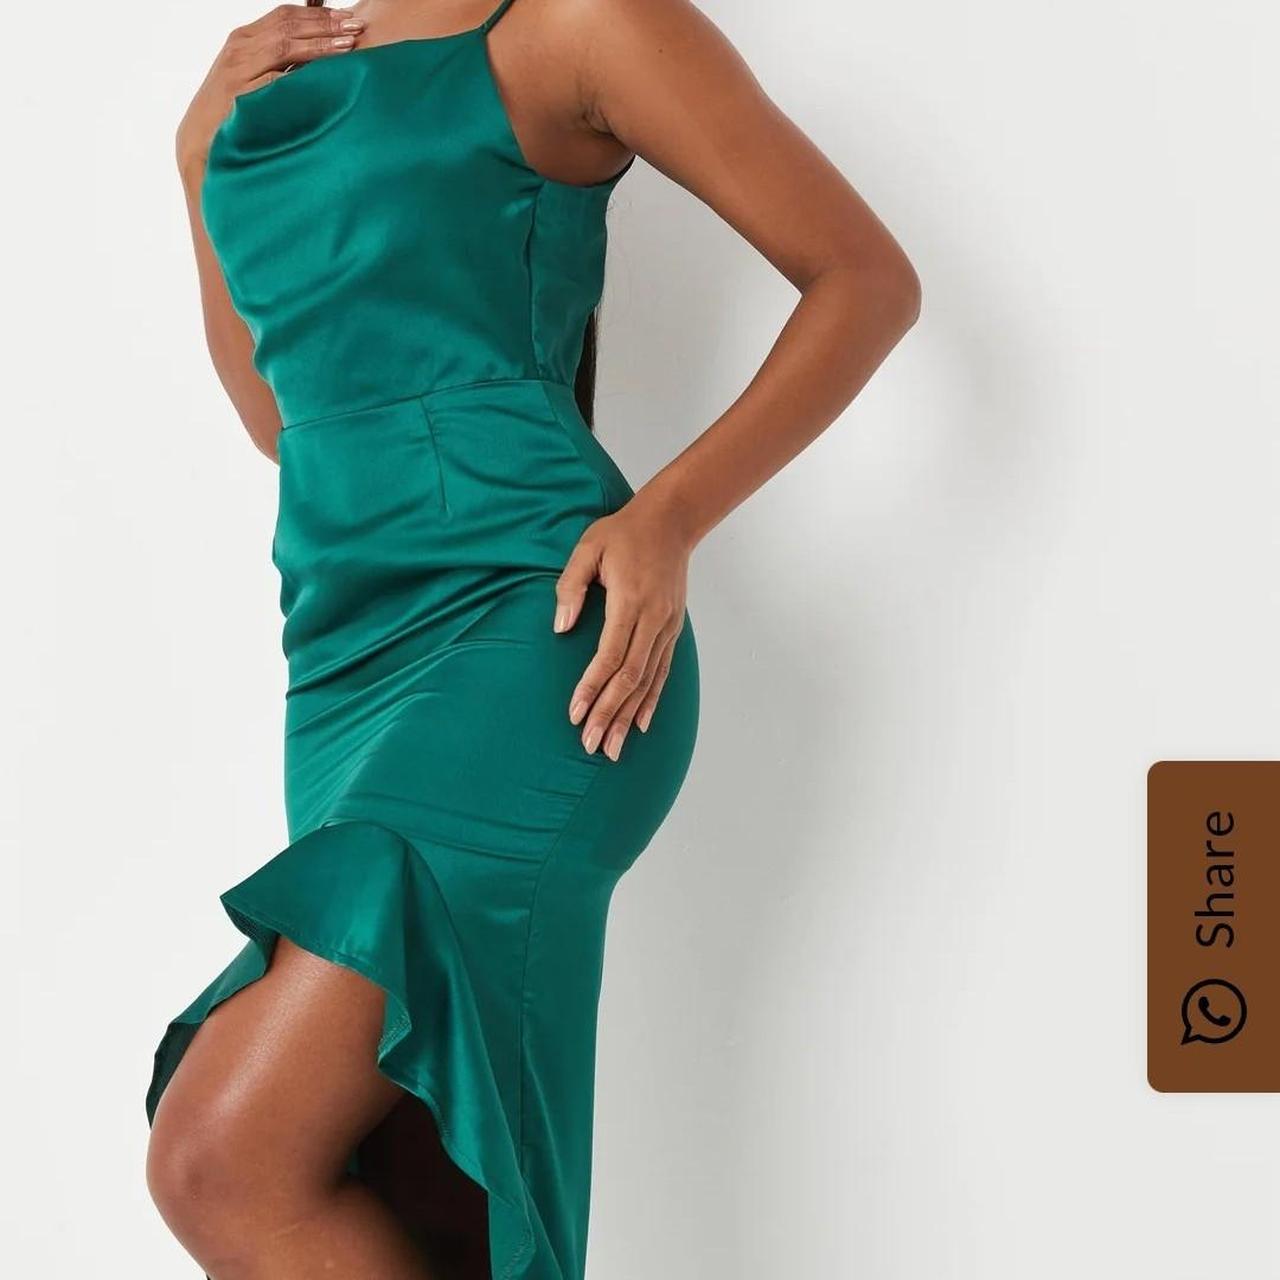 Missguided Green Satin Oversized Shirt Dress - ShopStyle